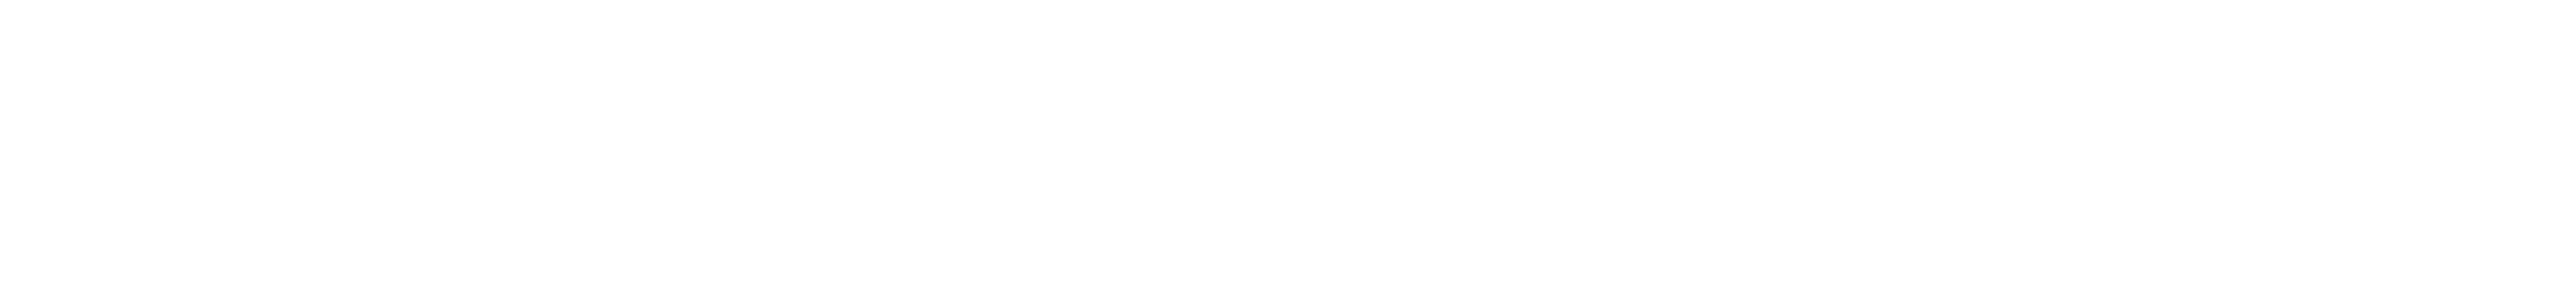 Virtualization and Cloud Administrator Program